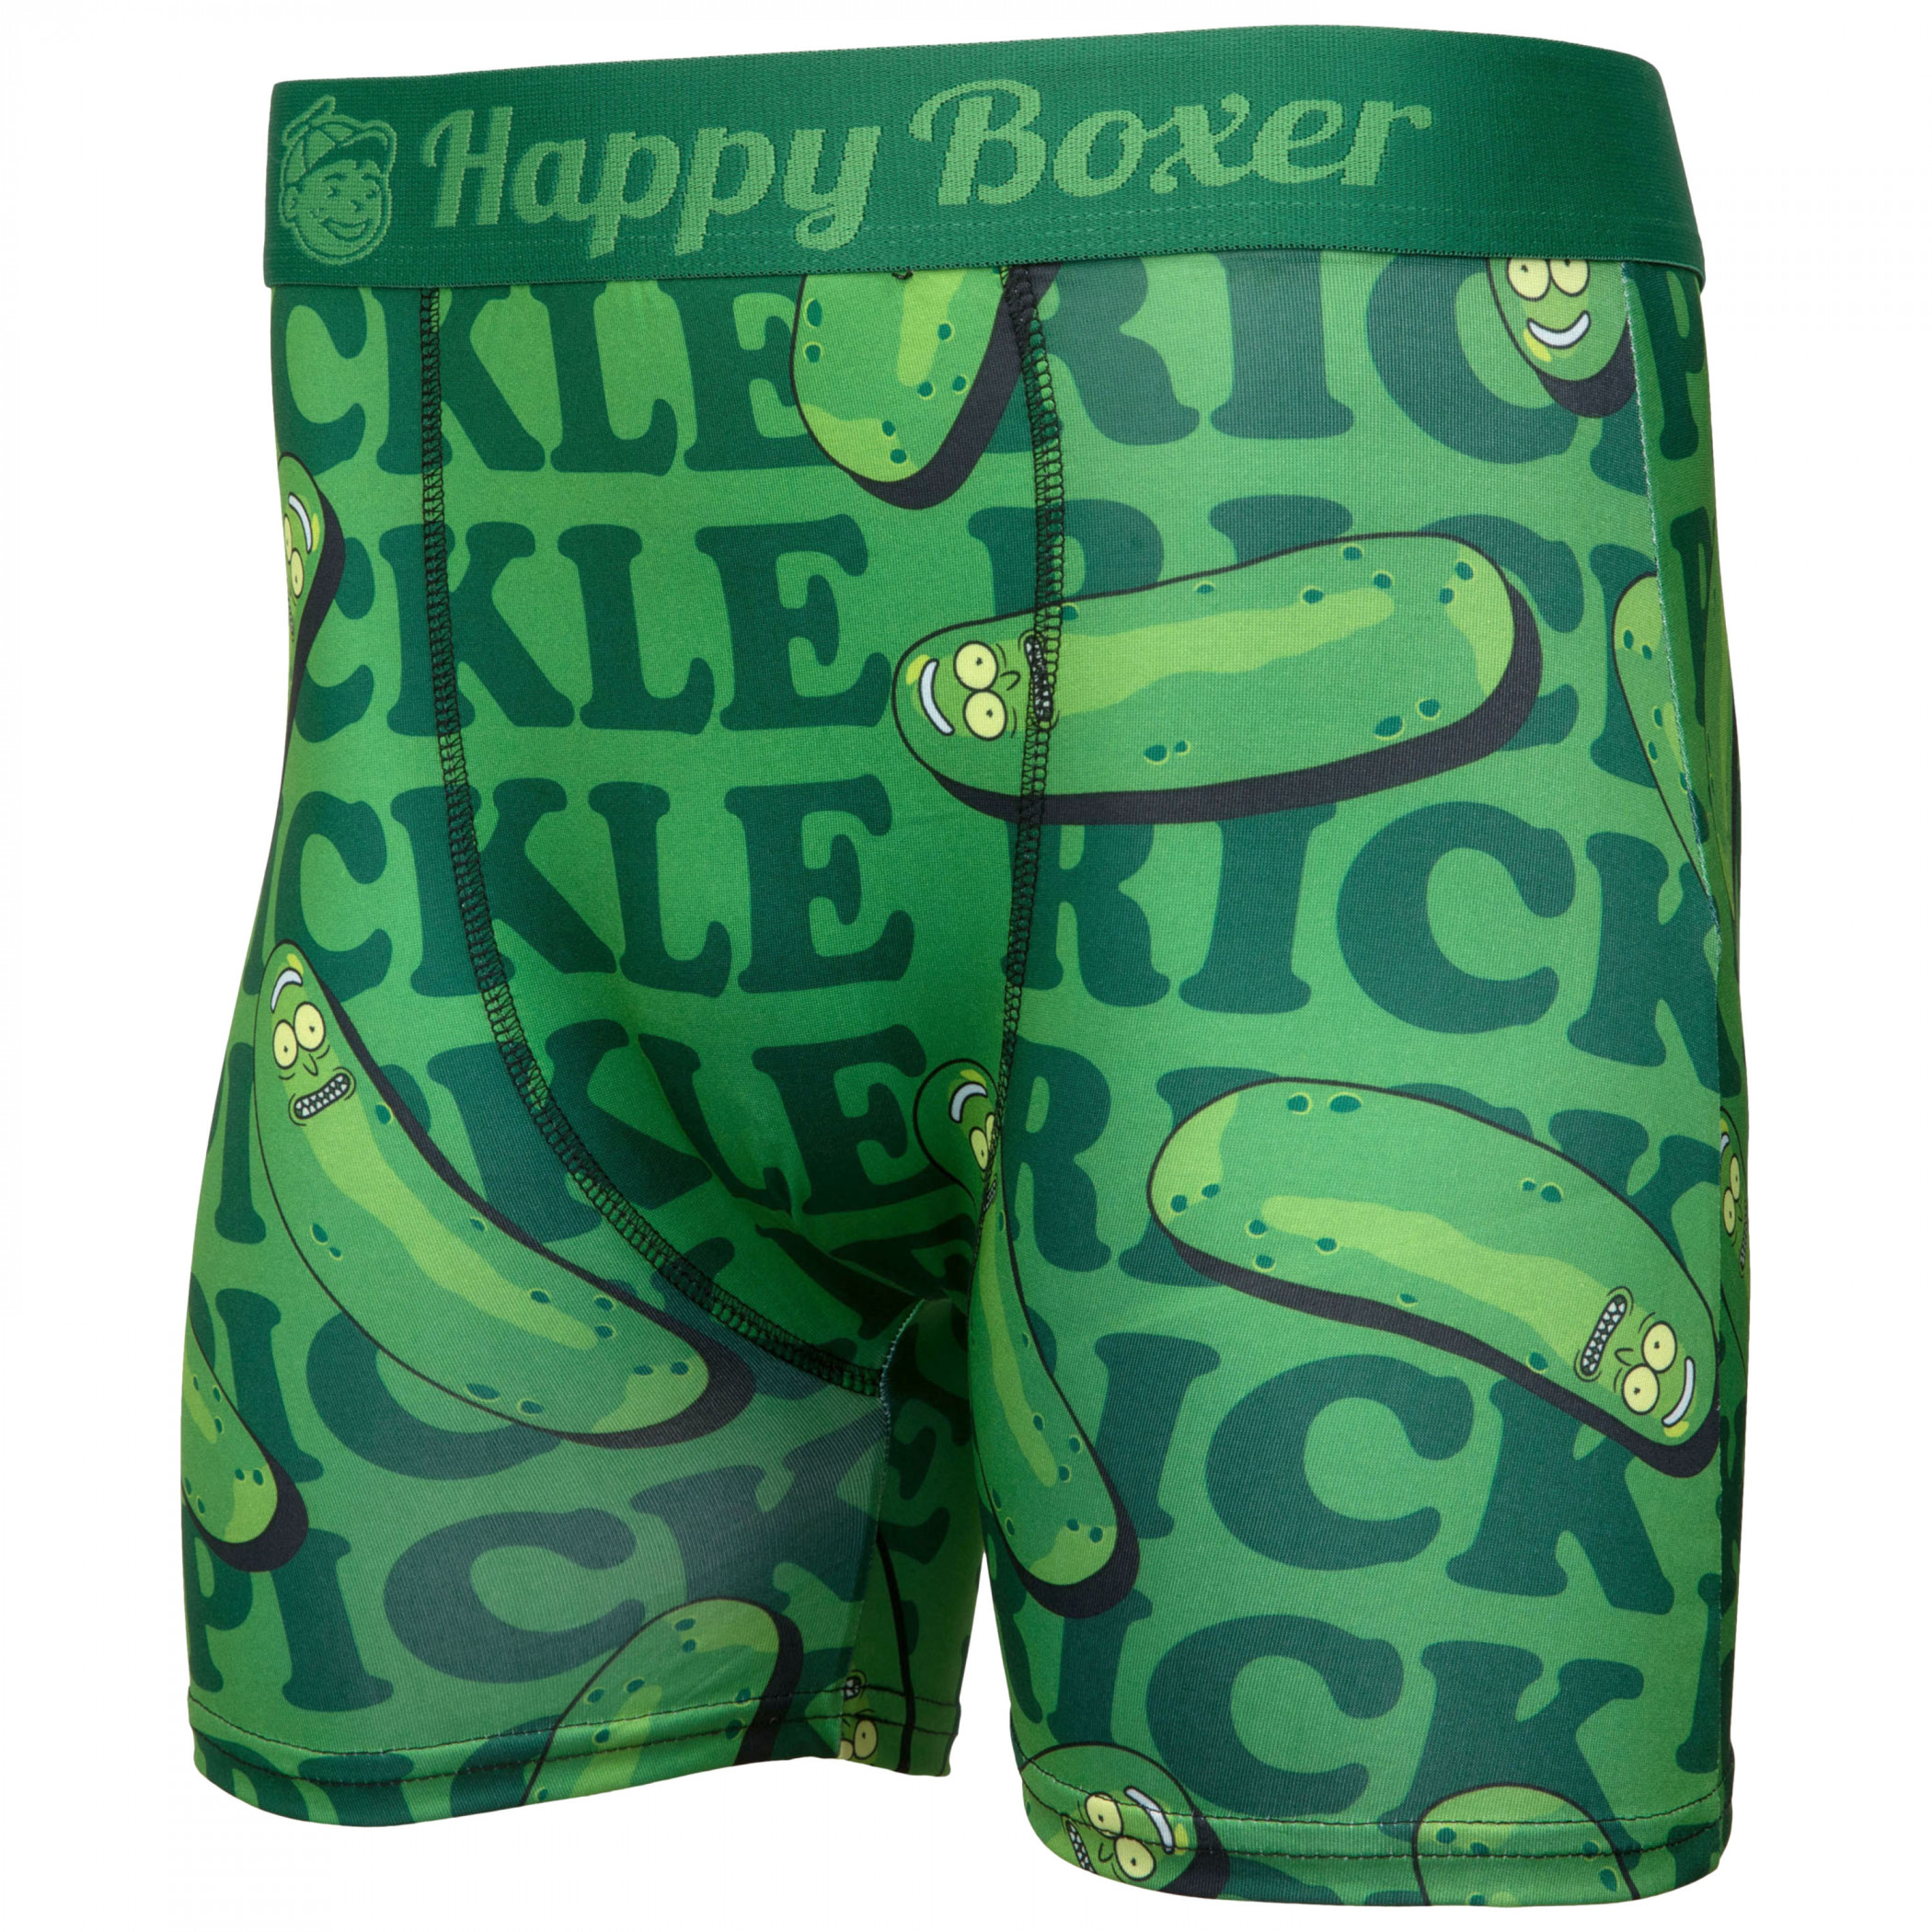 Rick and Morty Pickle Rick Happy Boxer Briefs Underwear